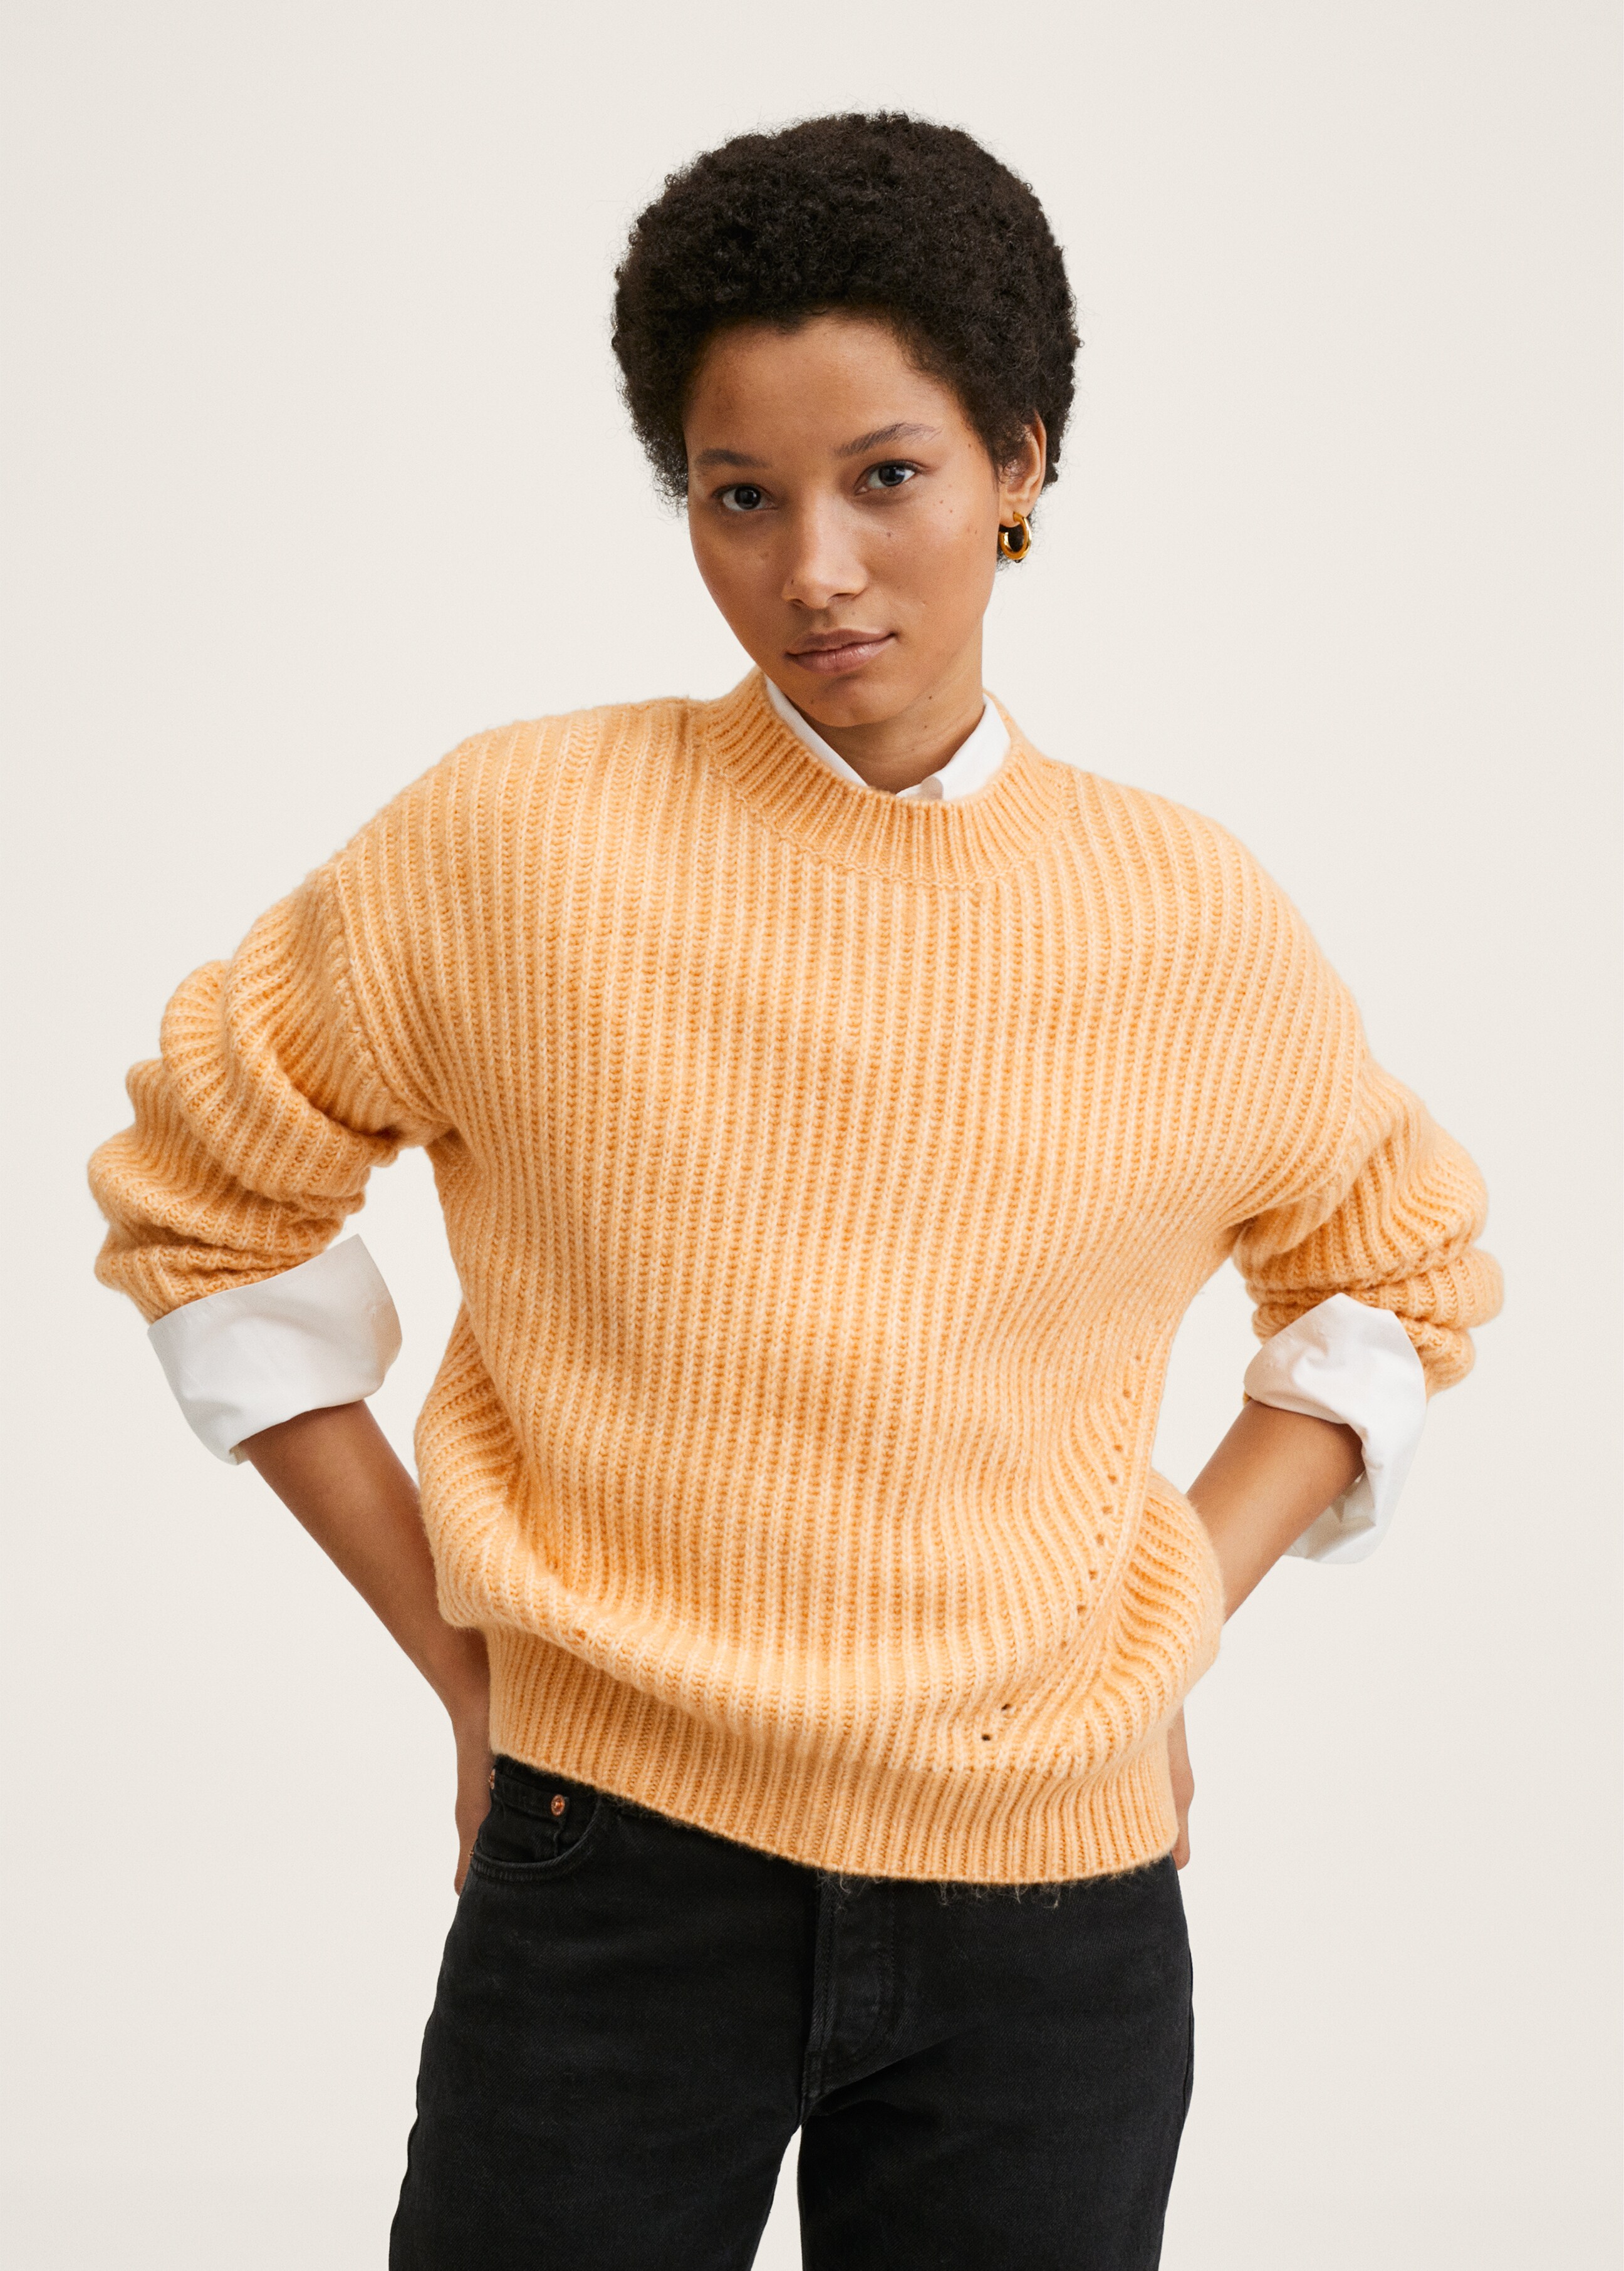 Chunky-knit sweater - Medium plane